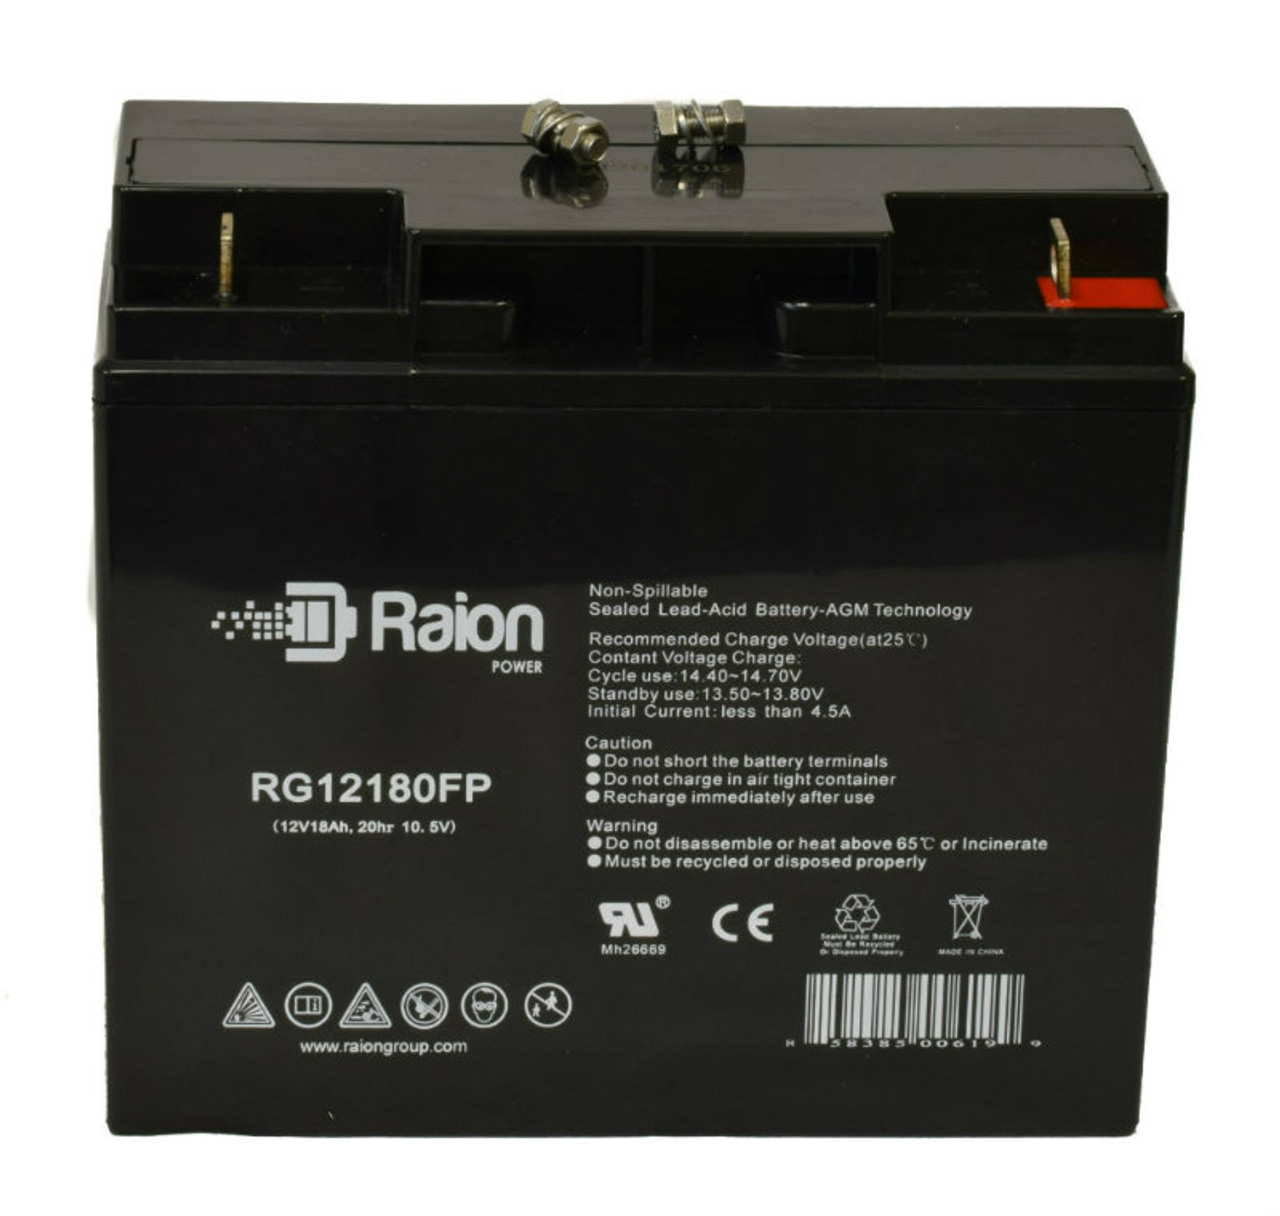 Raion Power RG12180FP 12V 18Ah Lead Acid Battery for Emmo Prestige